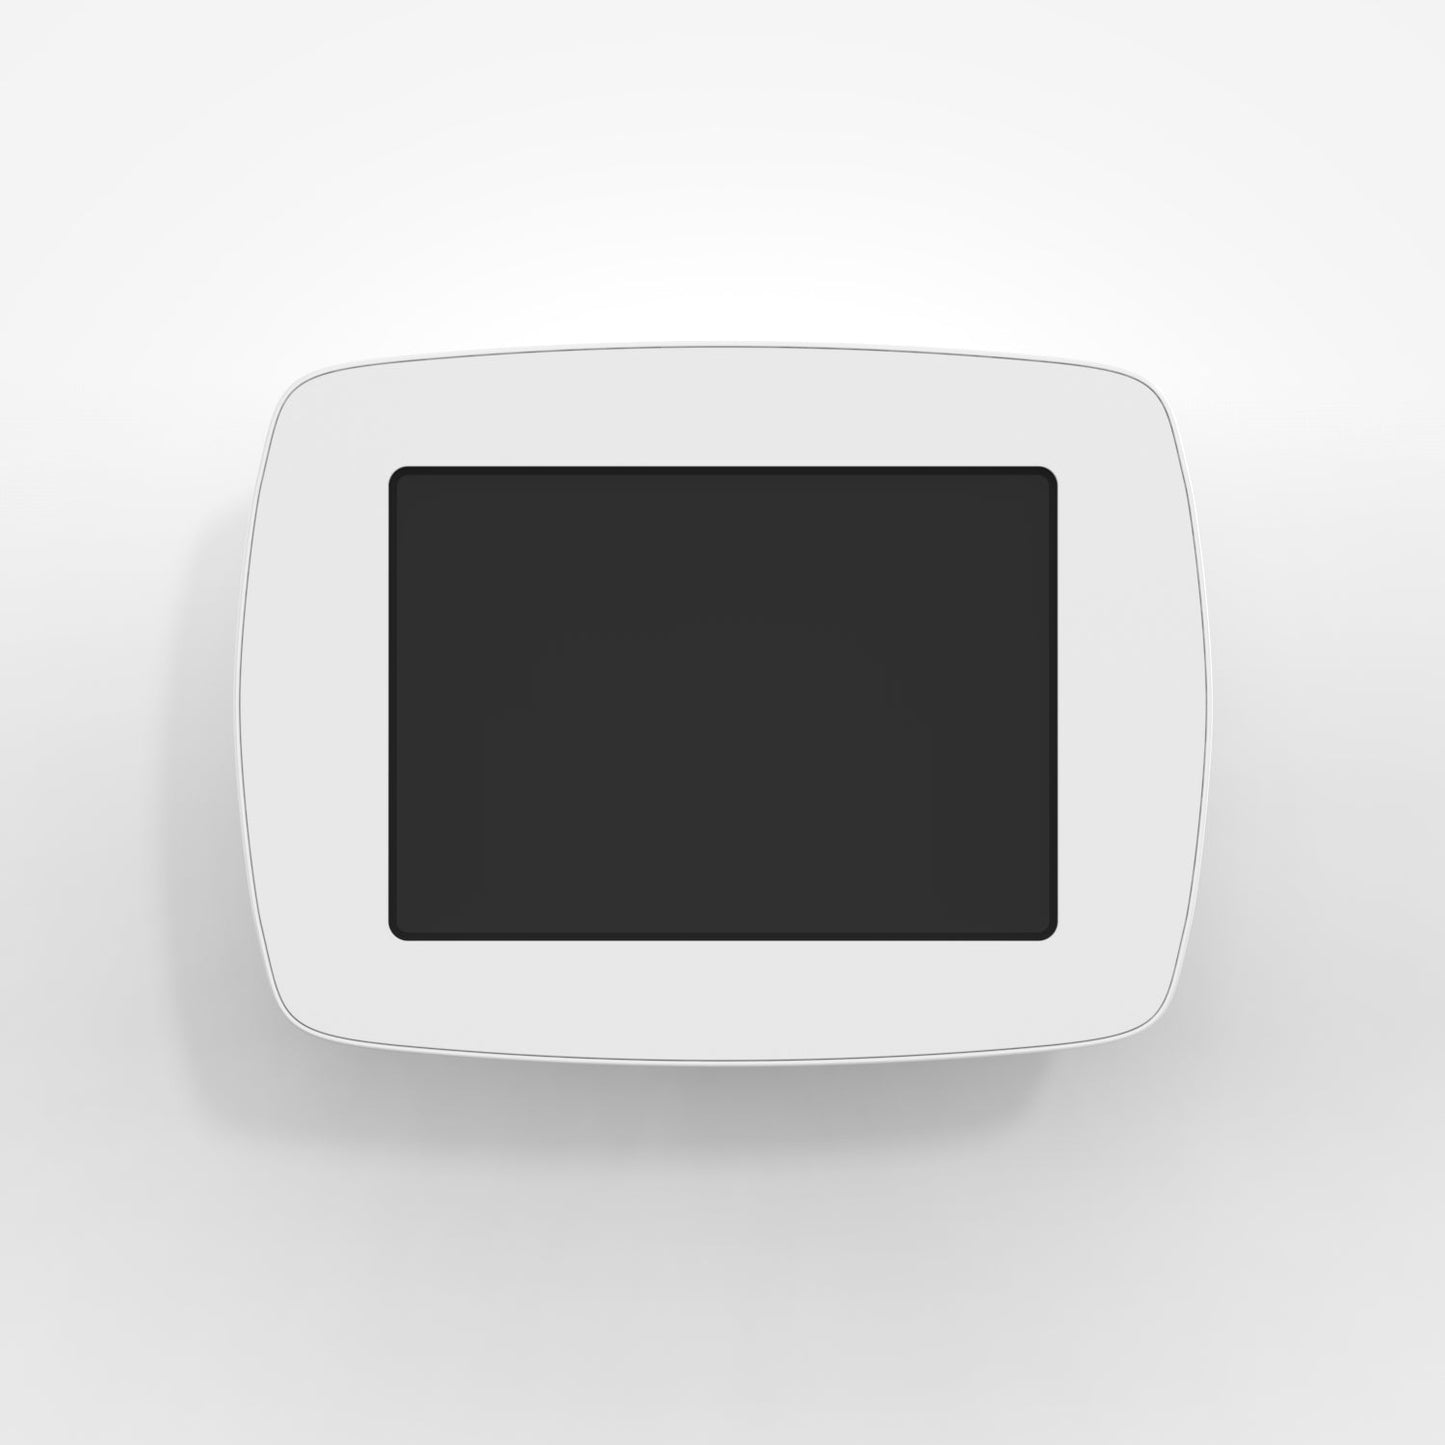 Bouncepad Vesa - A secure tablet & iPad vesa mount in white.